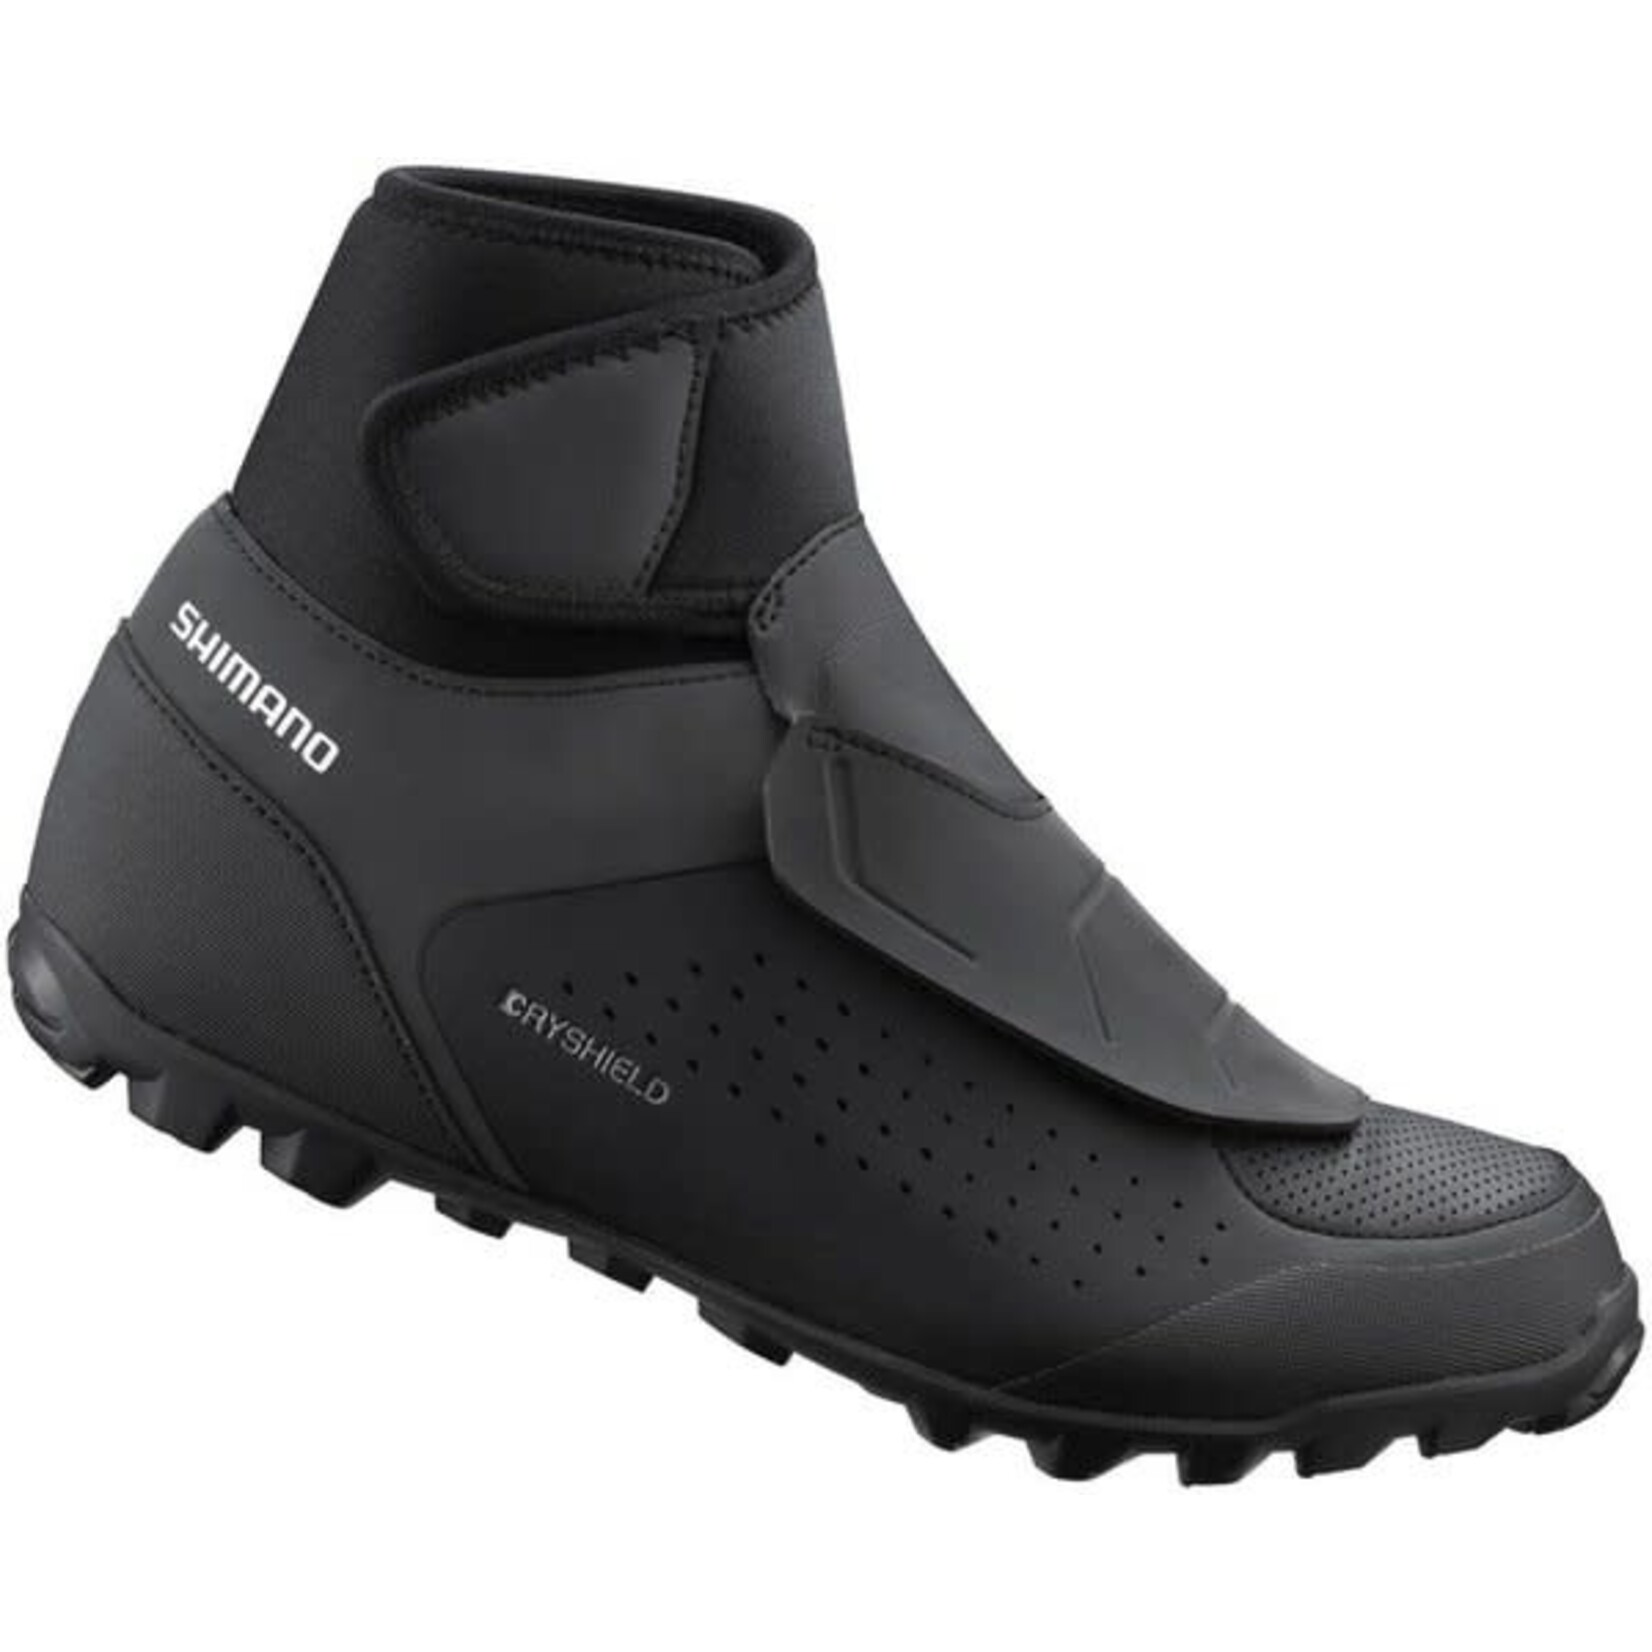 Shimano MW5 Winter Shoe